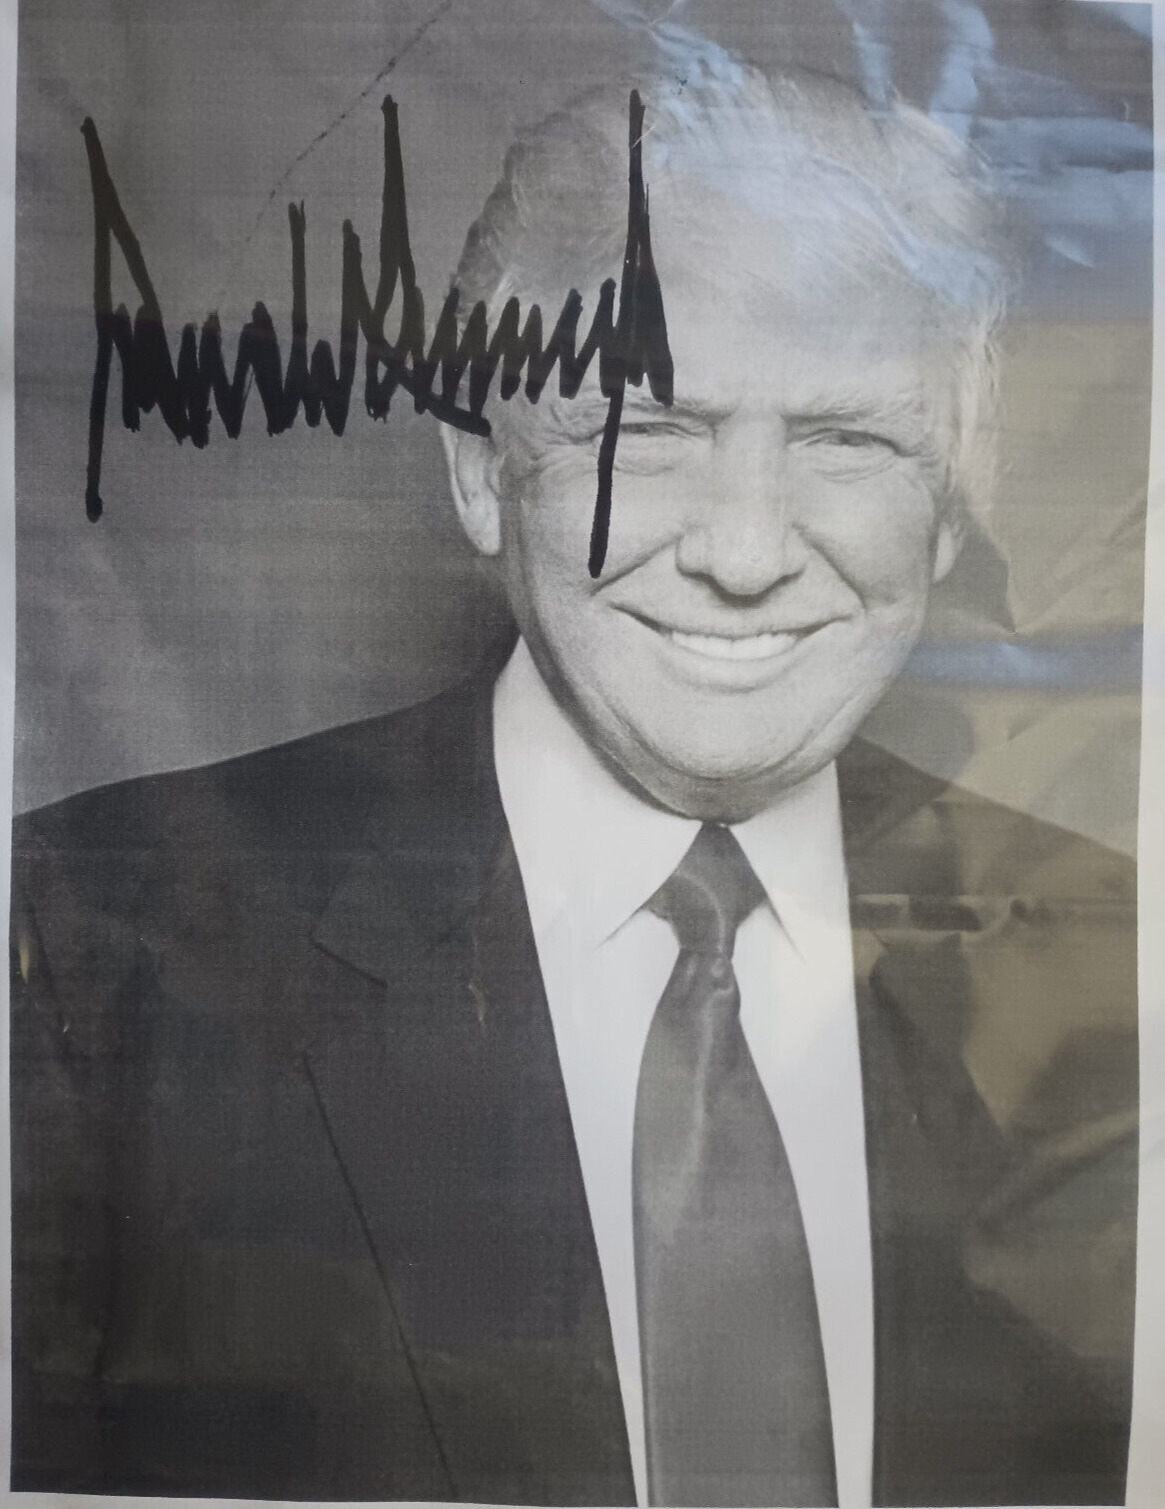 Donald Trump Autograph, Original, Not Reproduction